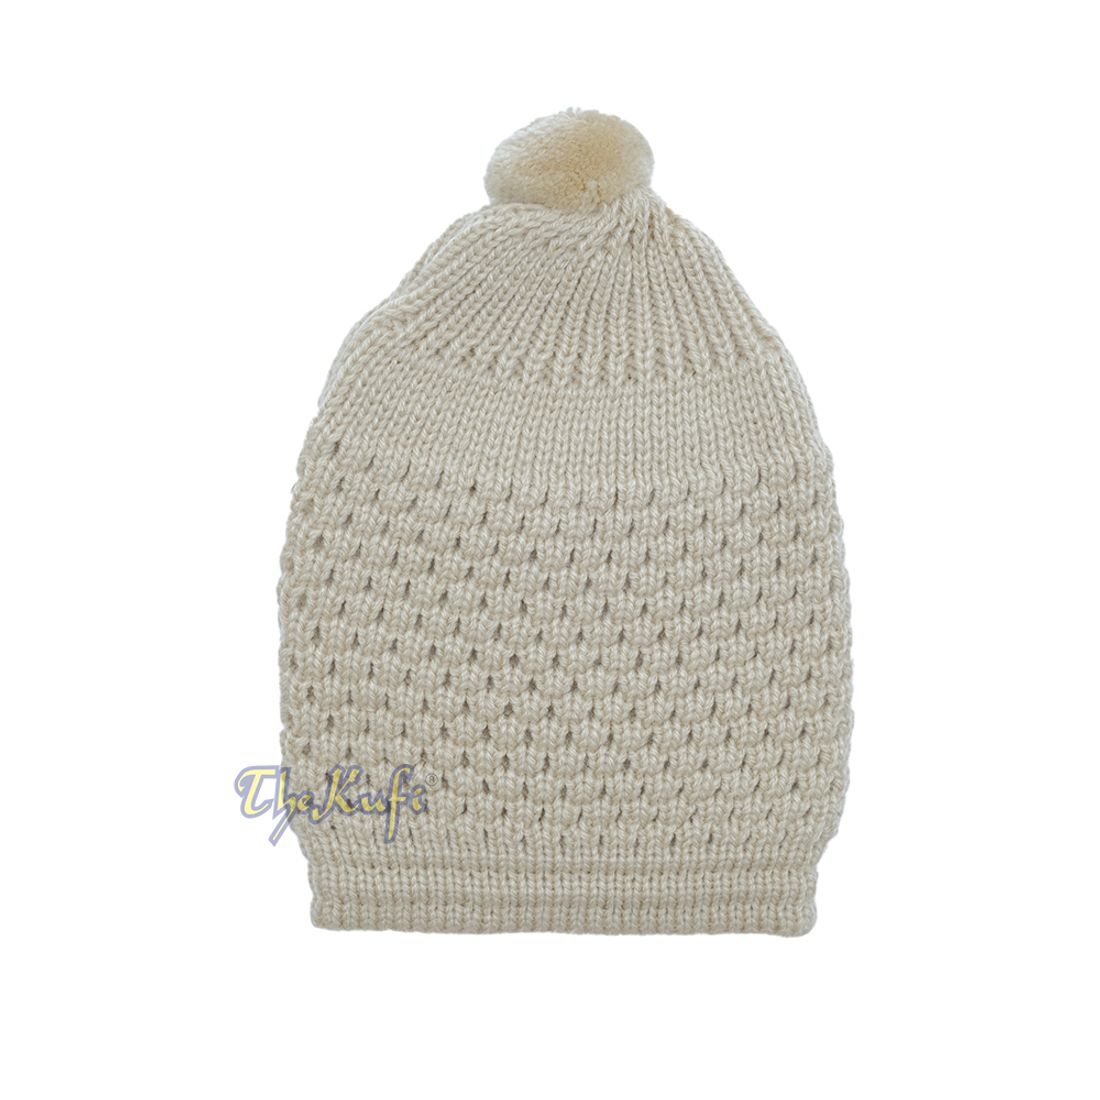 Light Brown Turkish-style Knit Stretchy Warm Beanie Hat